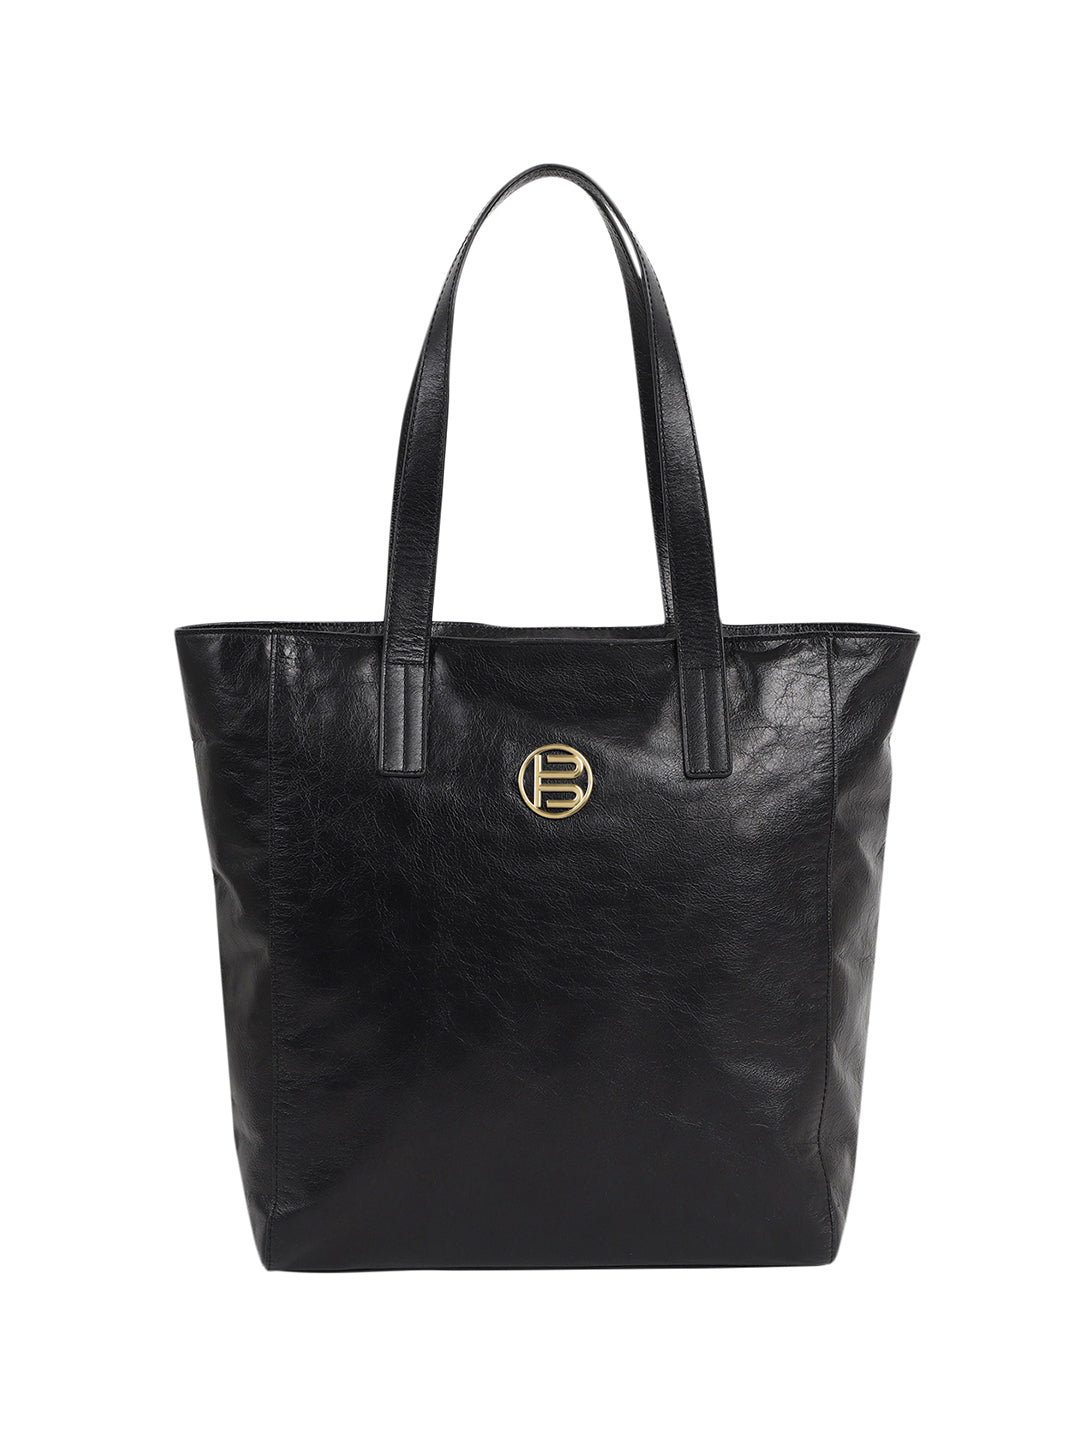 Veneto Black Leather Tote Bag